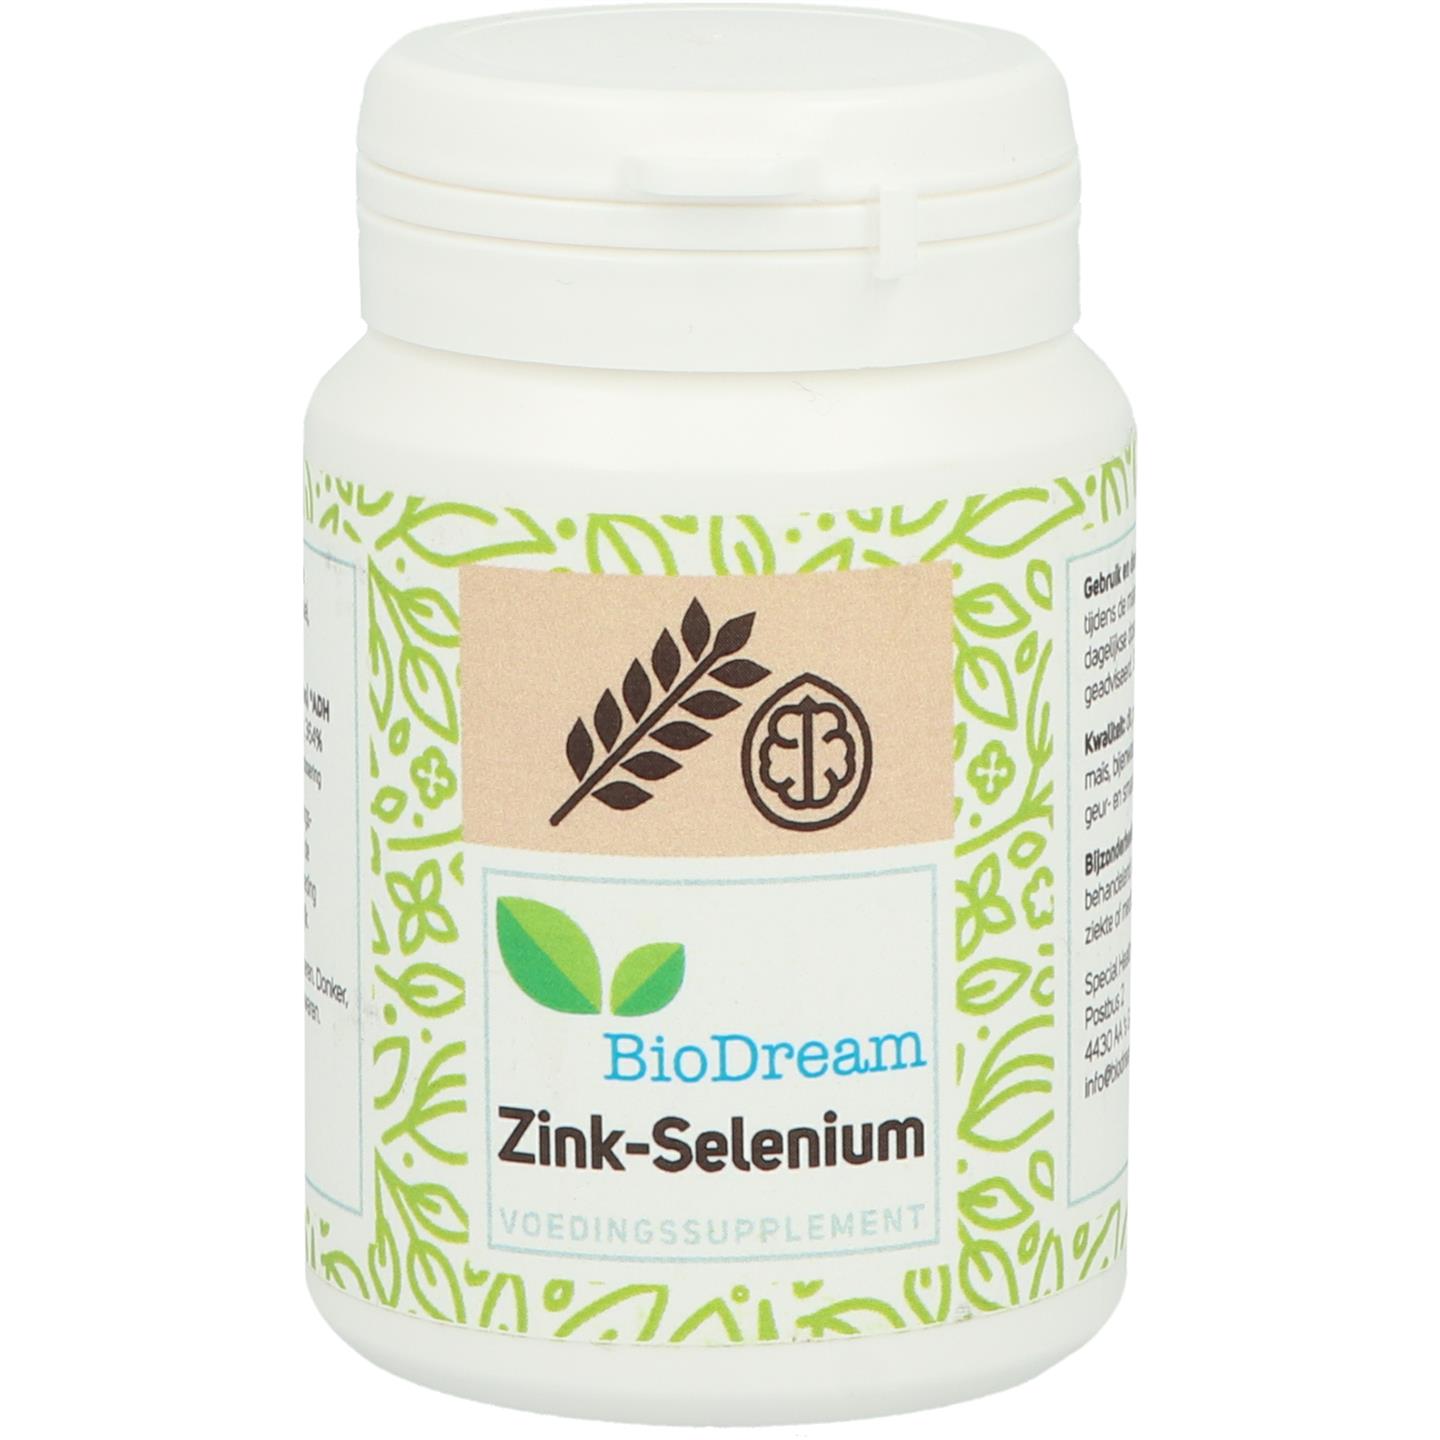 Biodream Zink Selenium 90cap